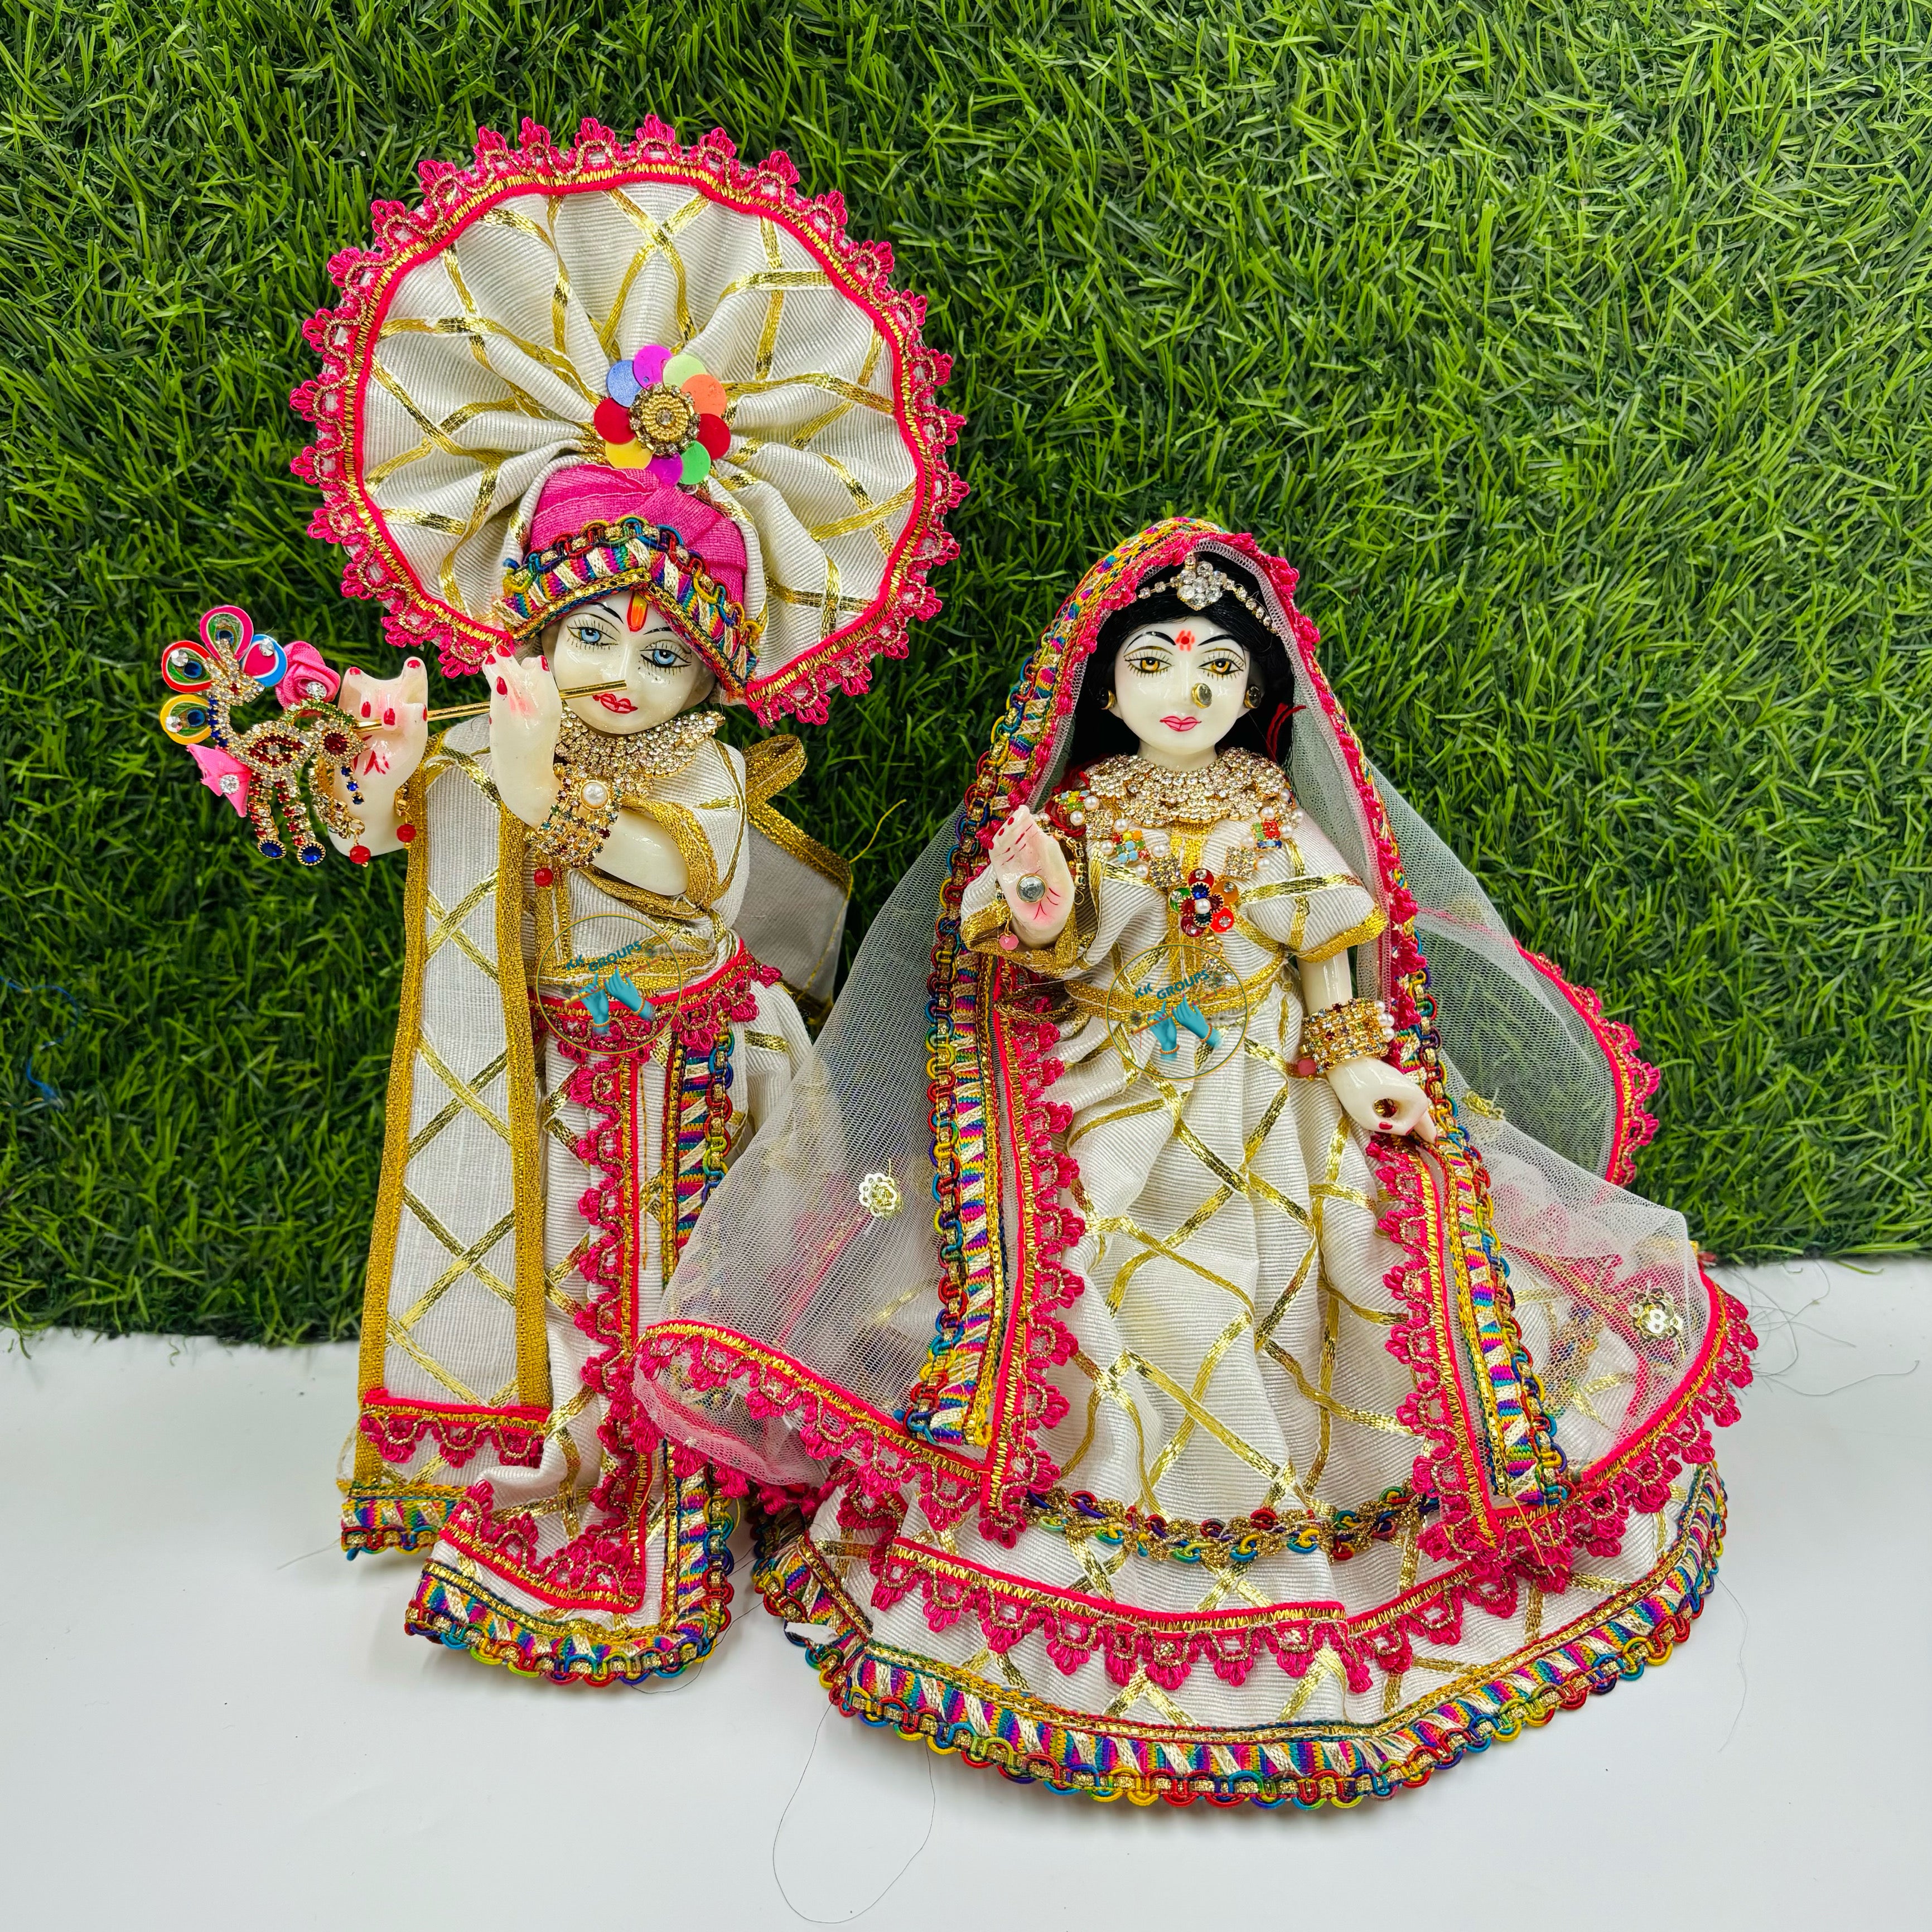 Radha Krishna Dresses Online in low price in India - Krishna Dress